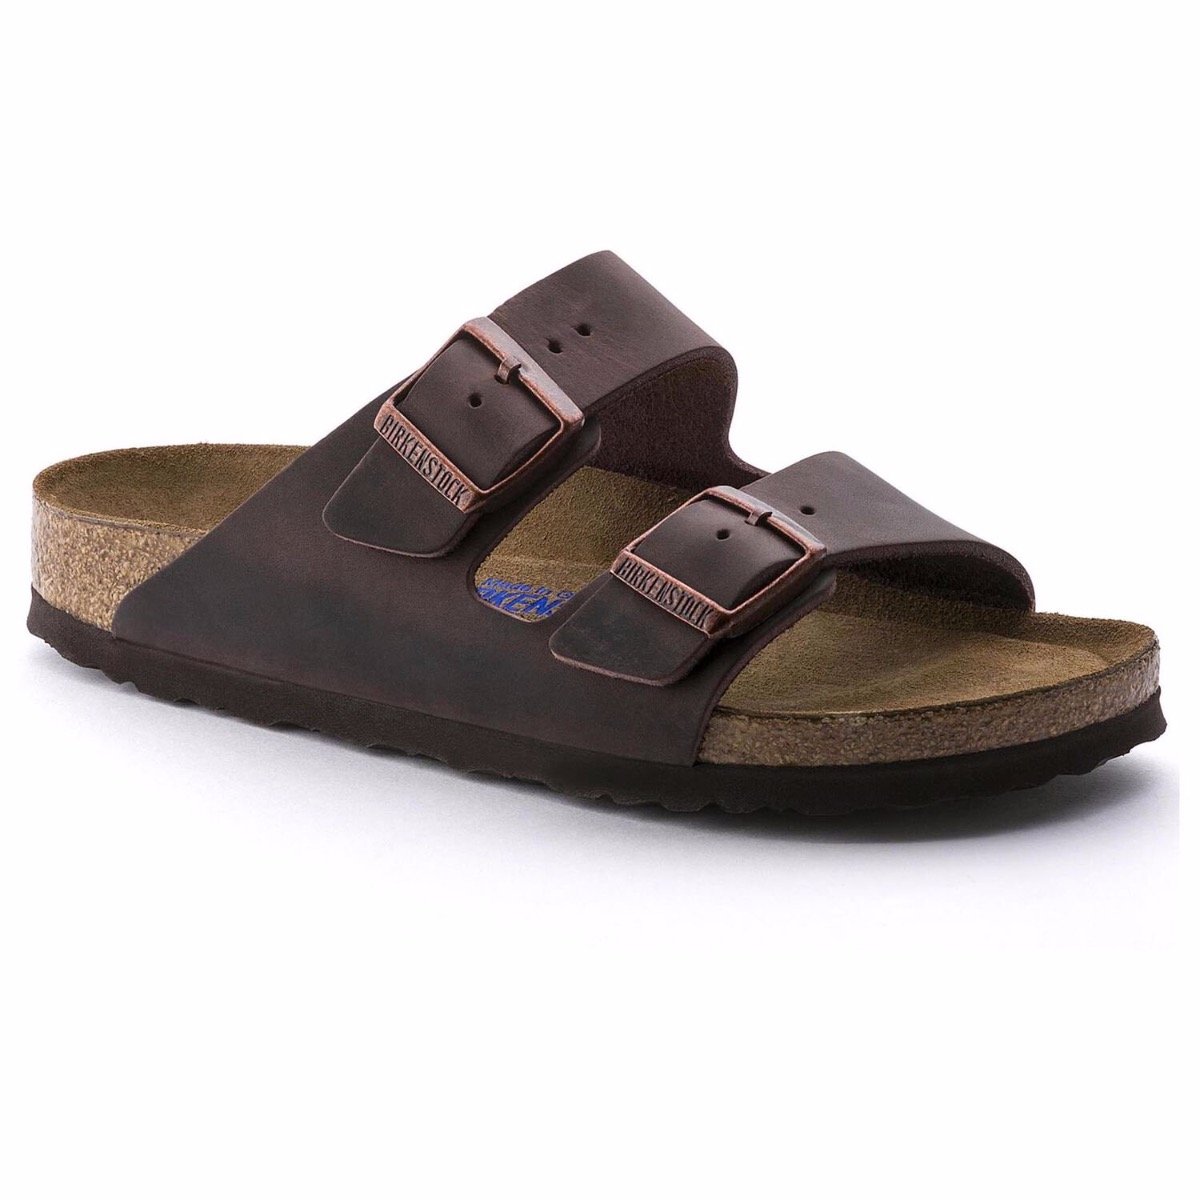 Køb Arizona sandal - Habana Birkenstock | Bahne.dk